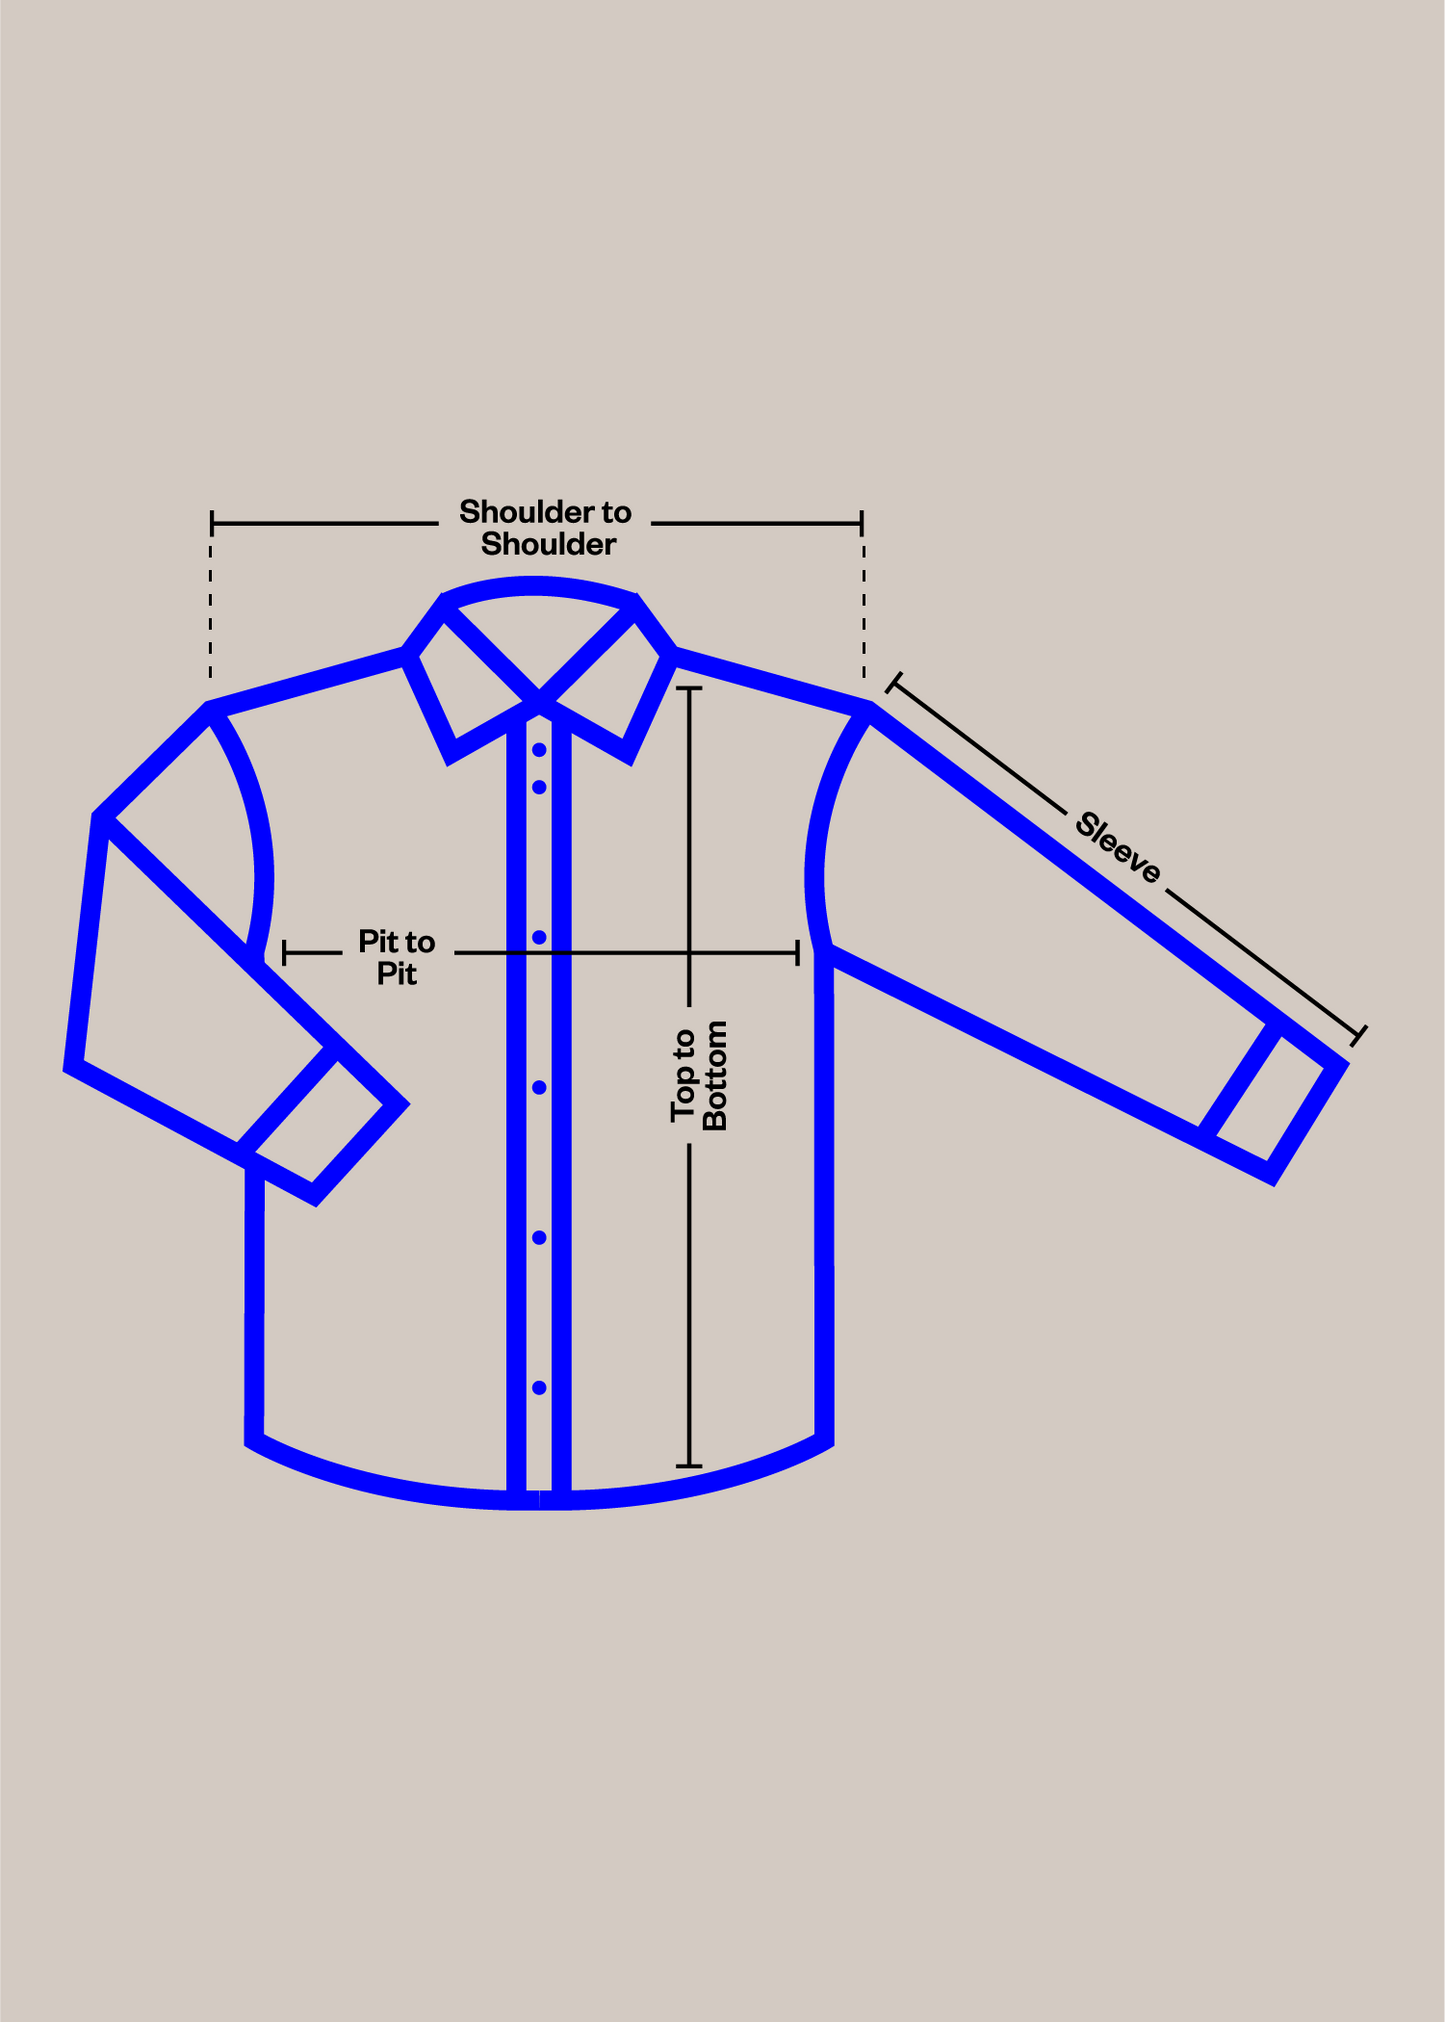 1980s Down Filled Reversible Vest Size S/M